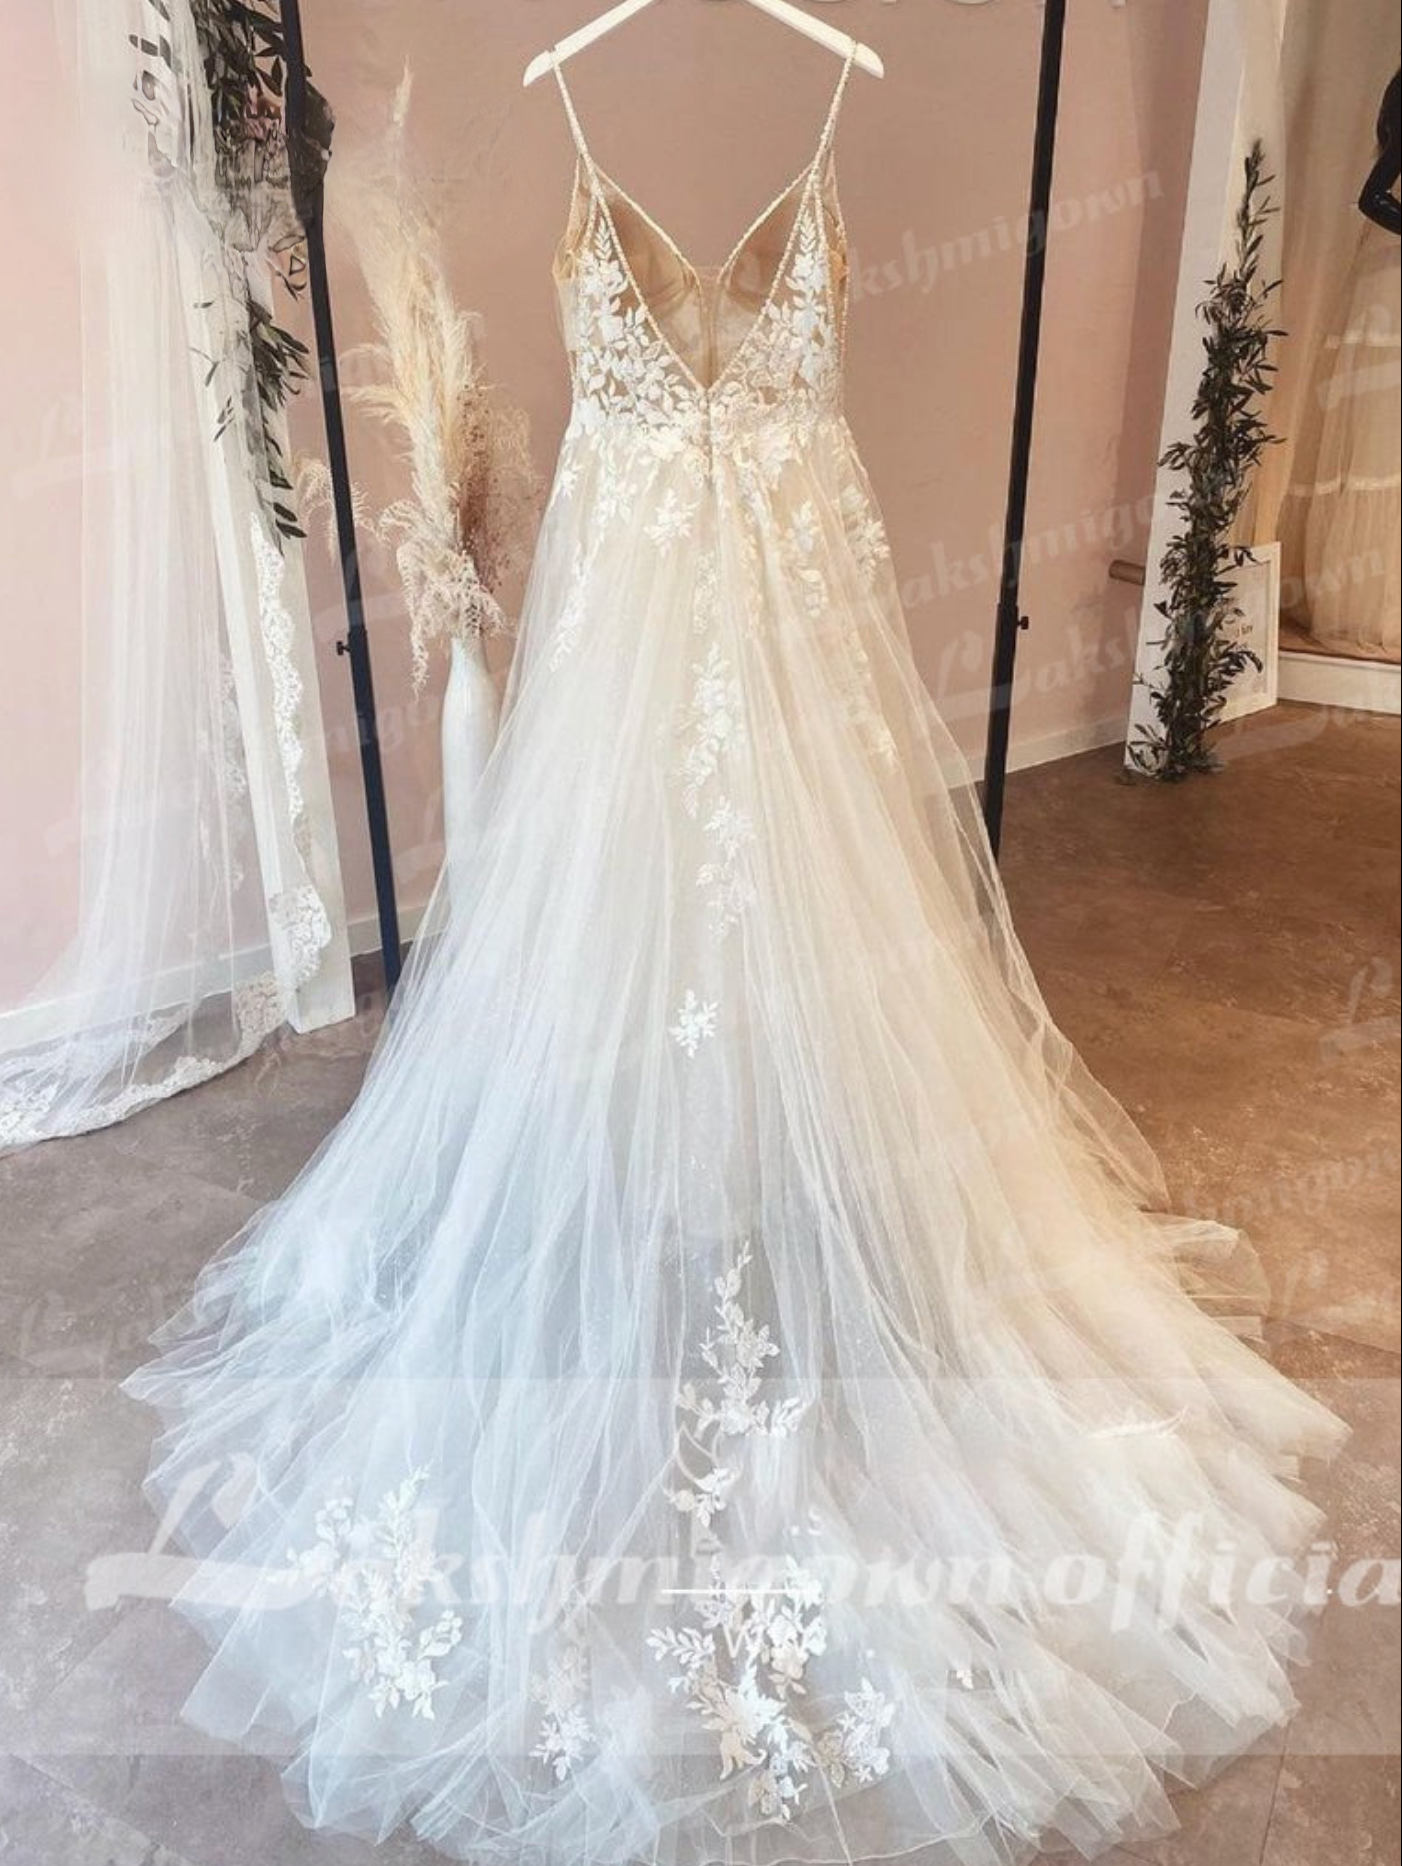 Amazing Tulle Ruffles Wedding Dress Lace Bridal Gowns Spaghetti